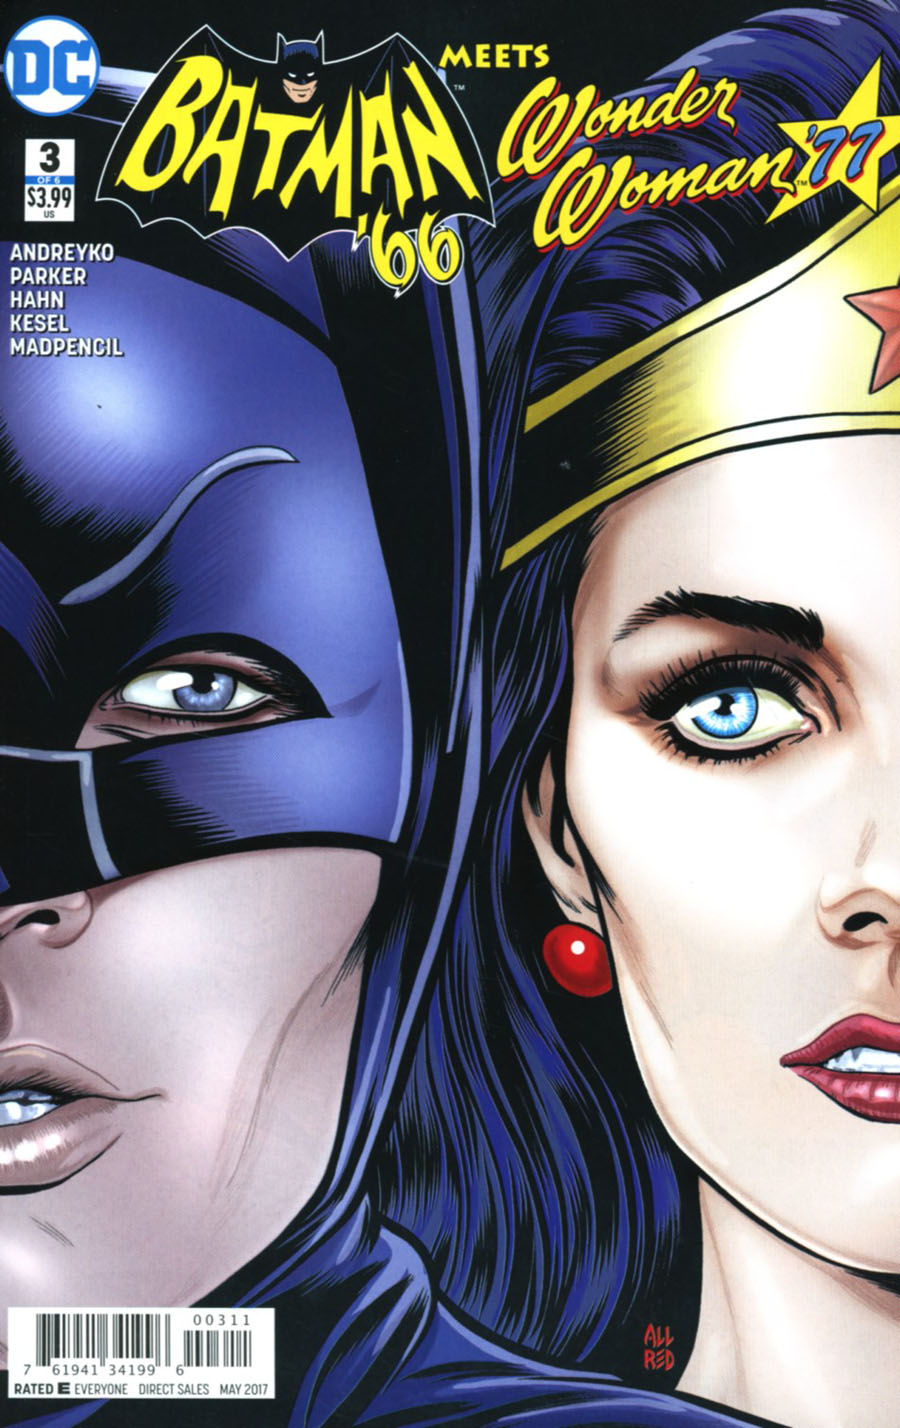 Batman 66 Meets Wonder Woman 77 #3